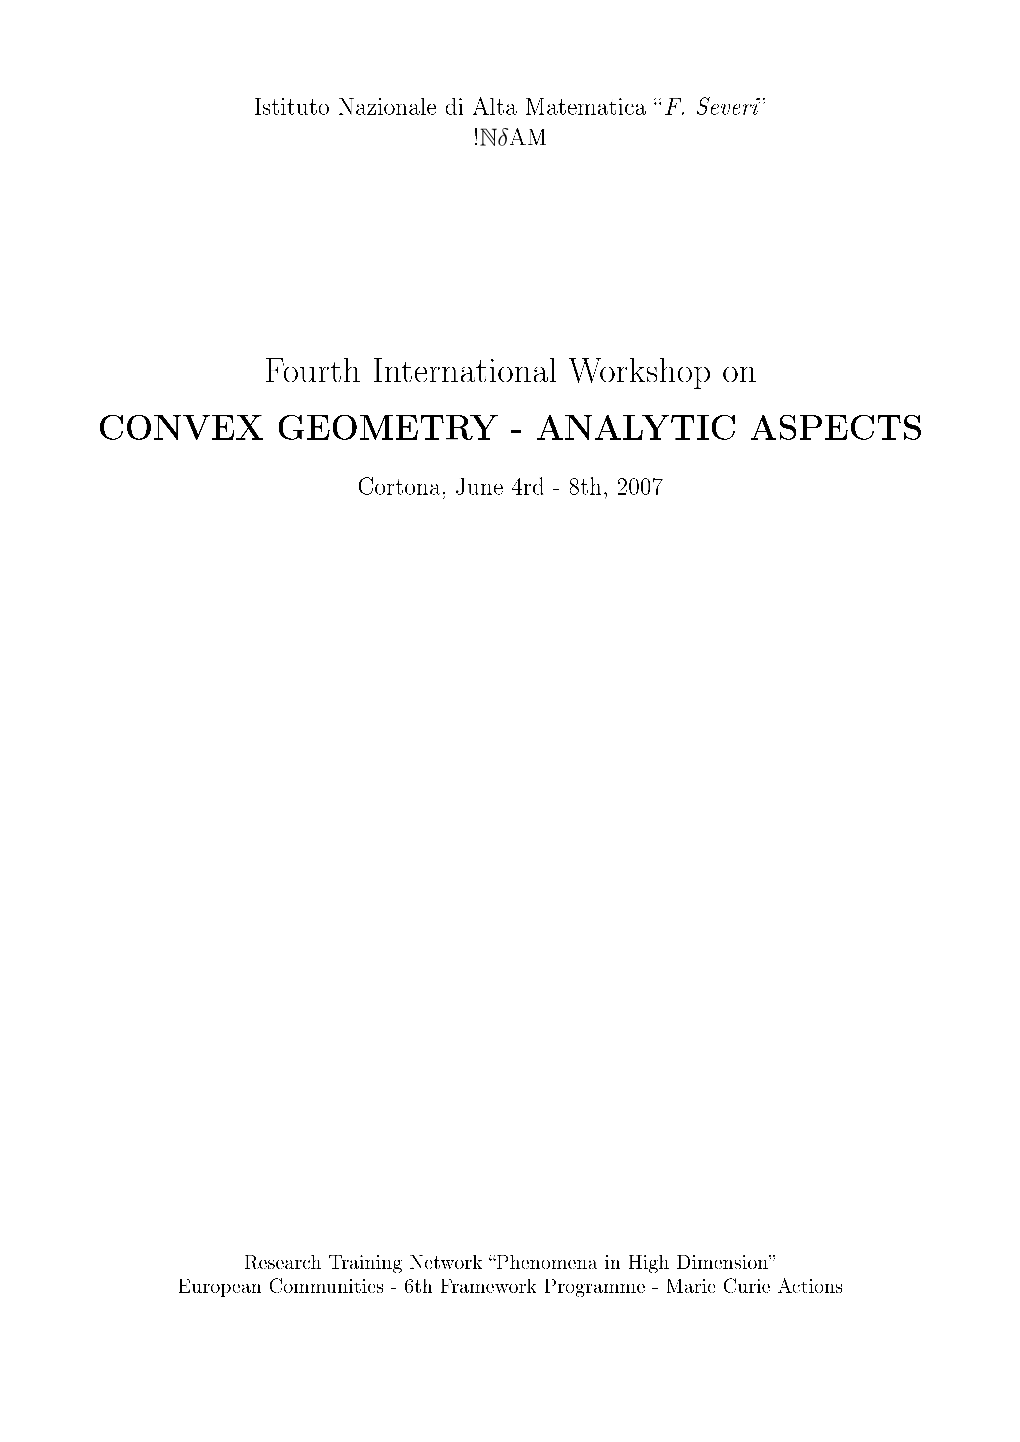 Convex Geometry - Analytic Aspects